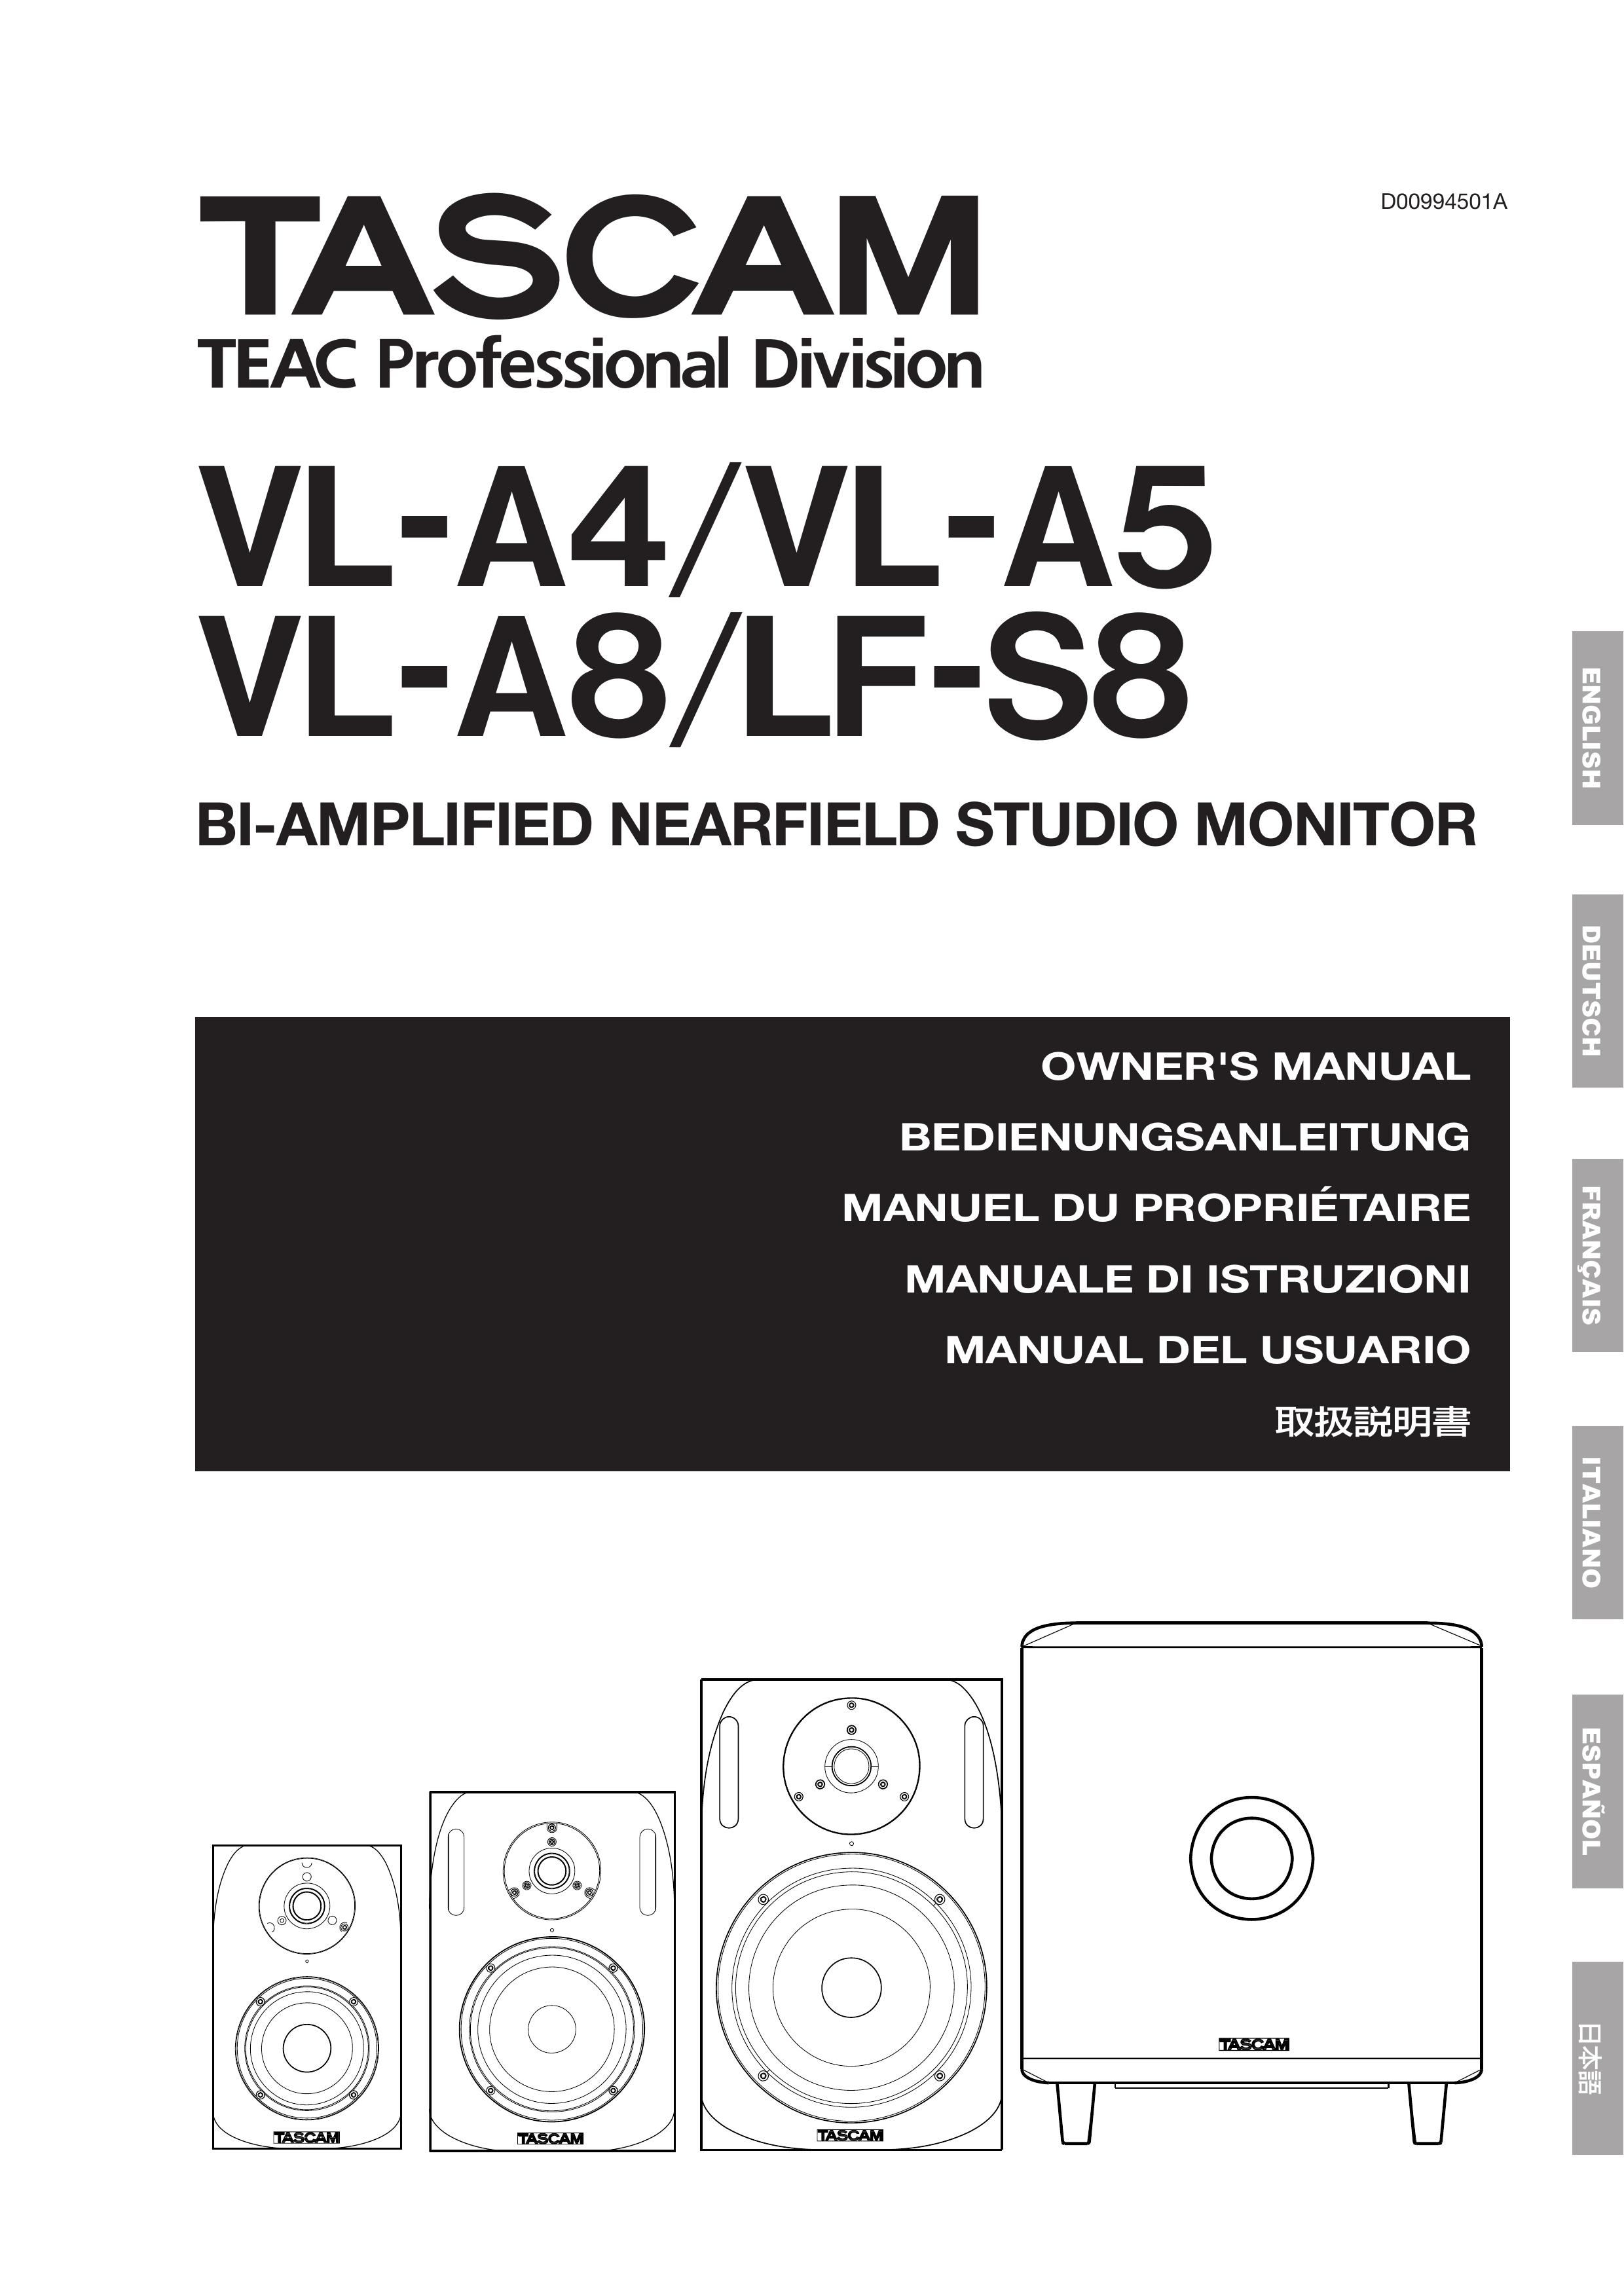 Tascam VL-A4/VL-A5 Recording Equipment User Manual